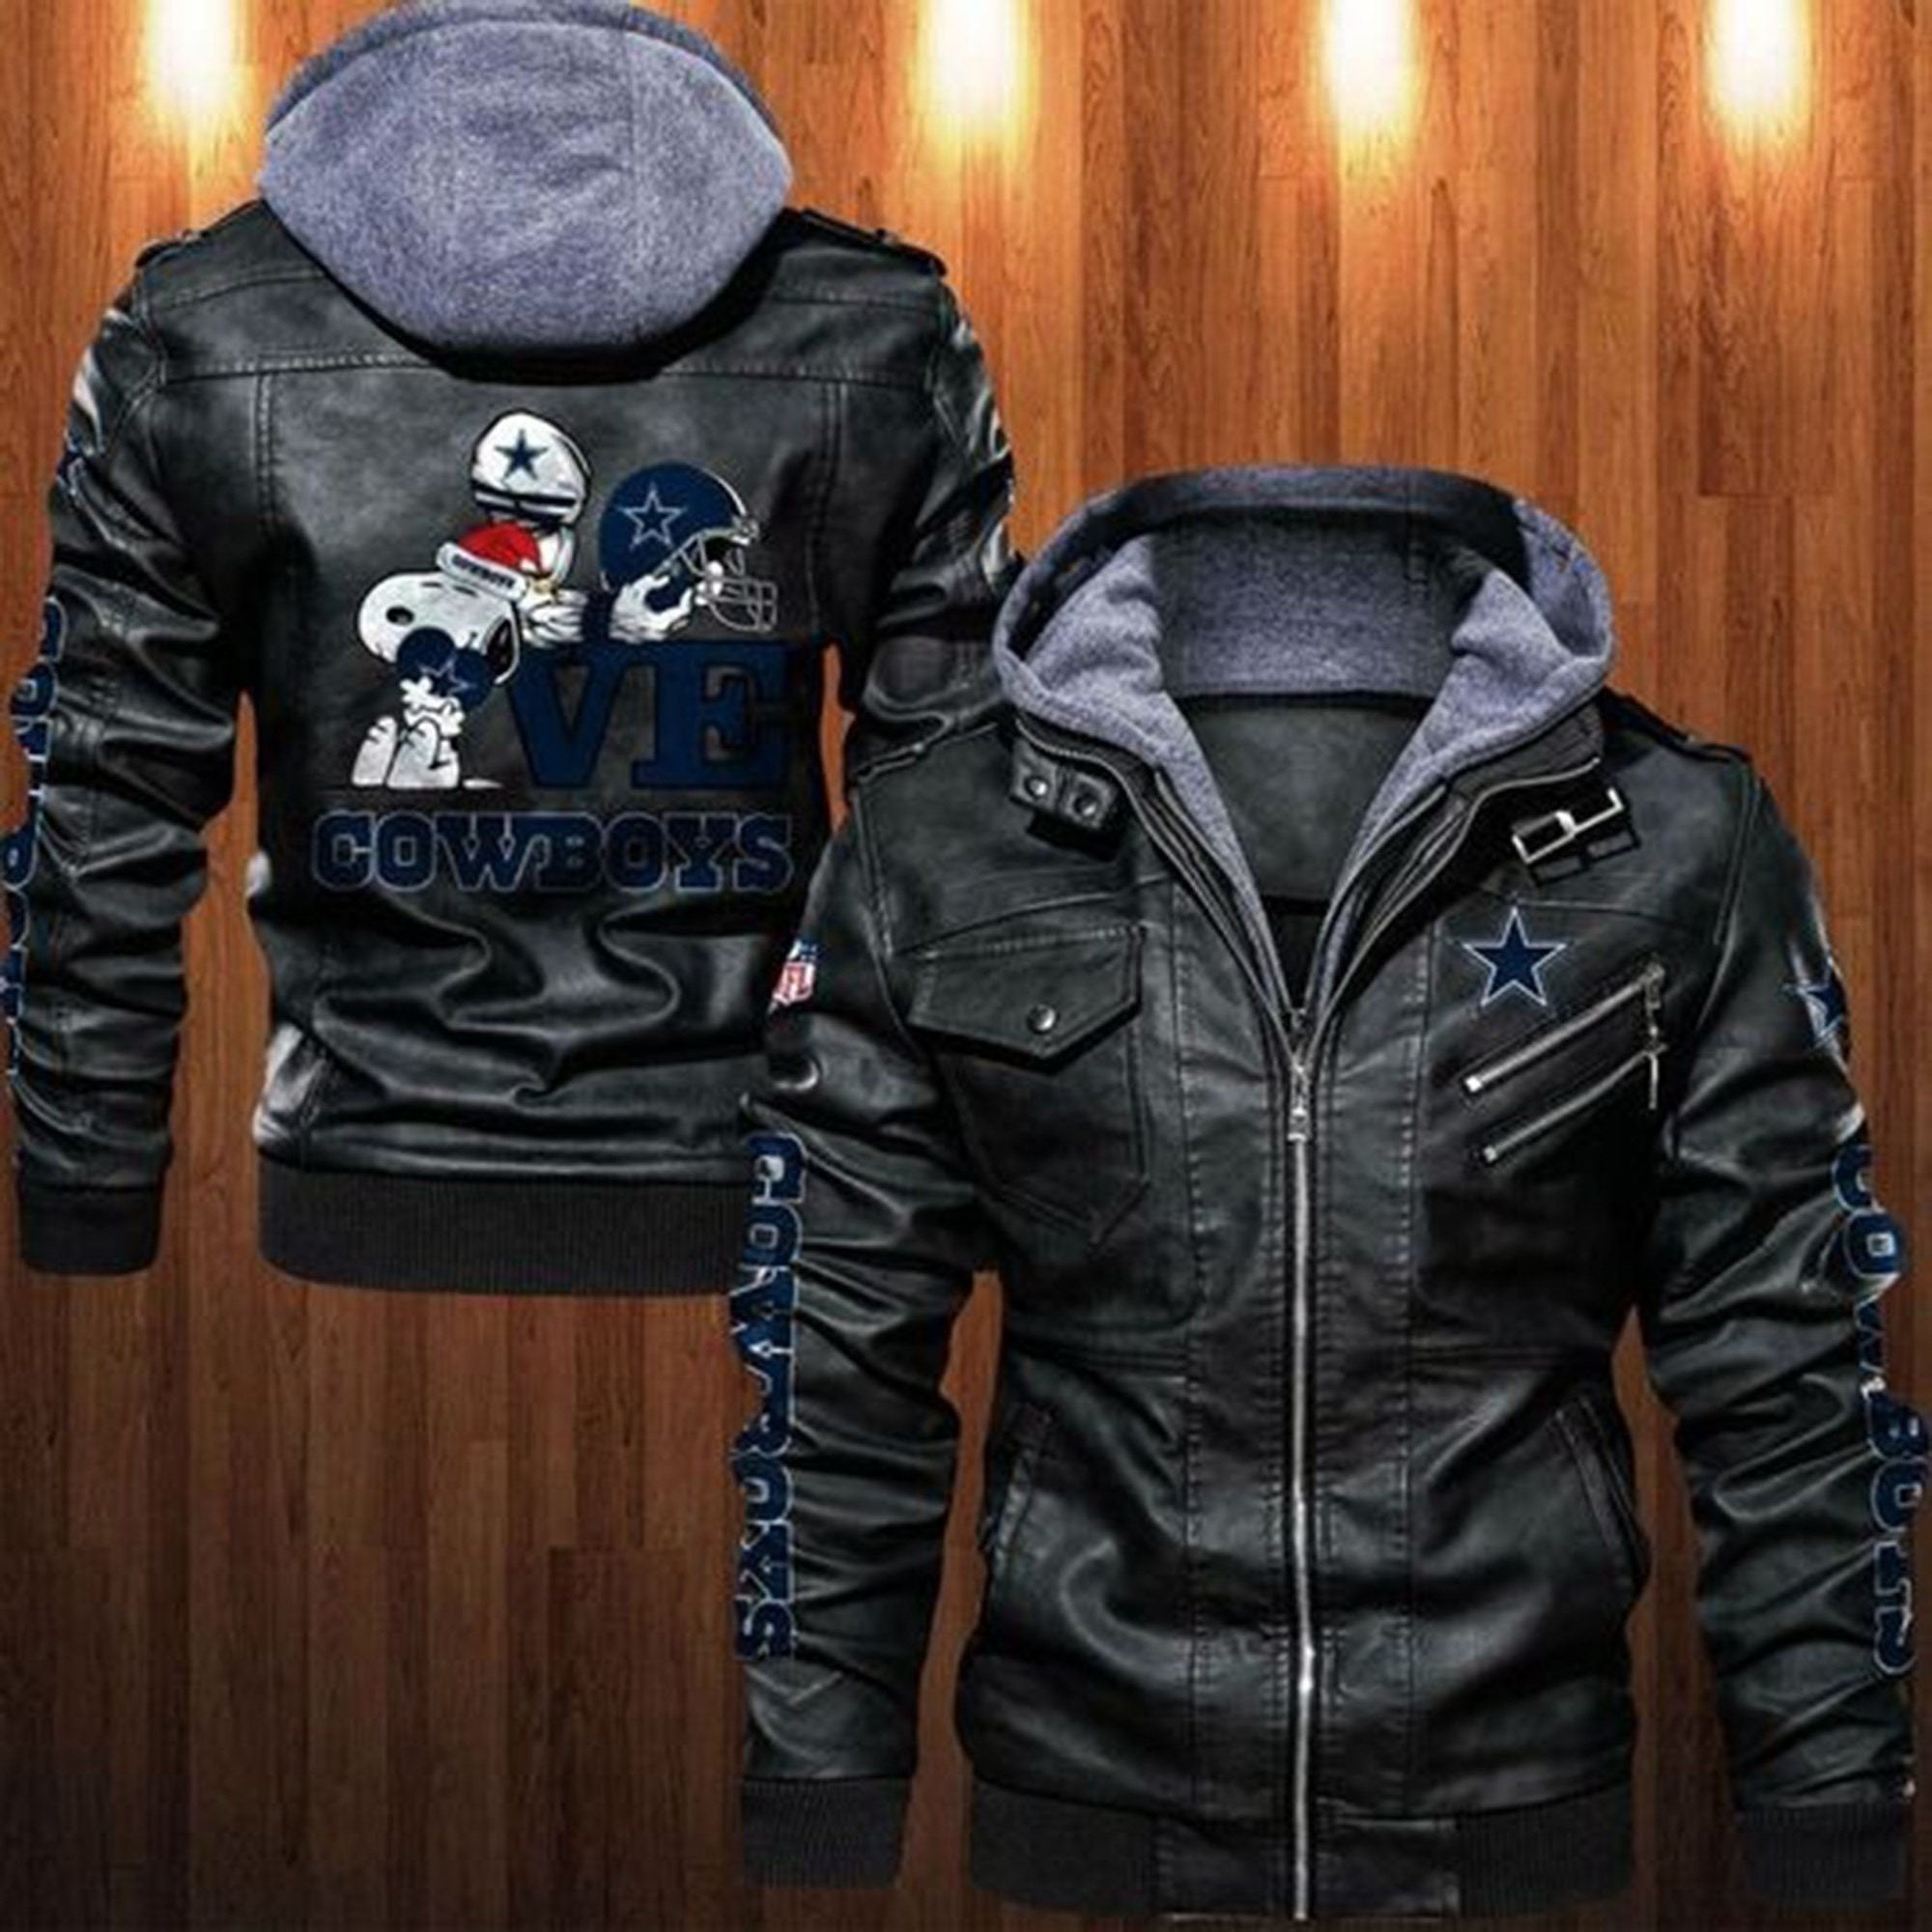 Choosing Leather Jacket that looks good on you below 90